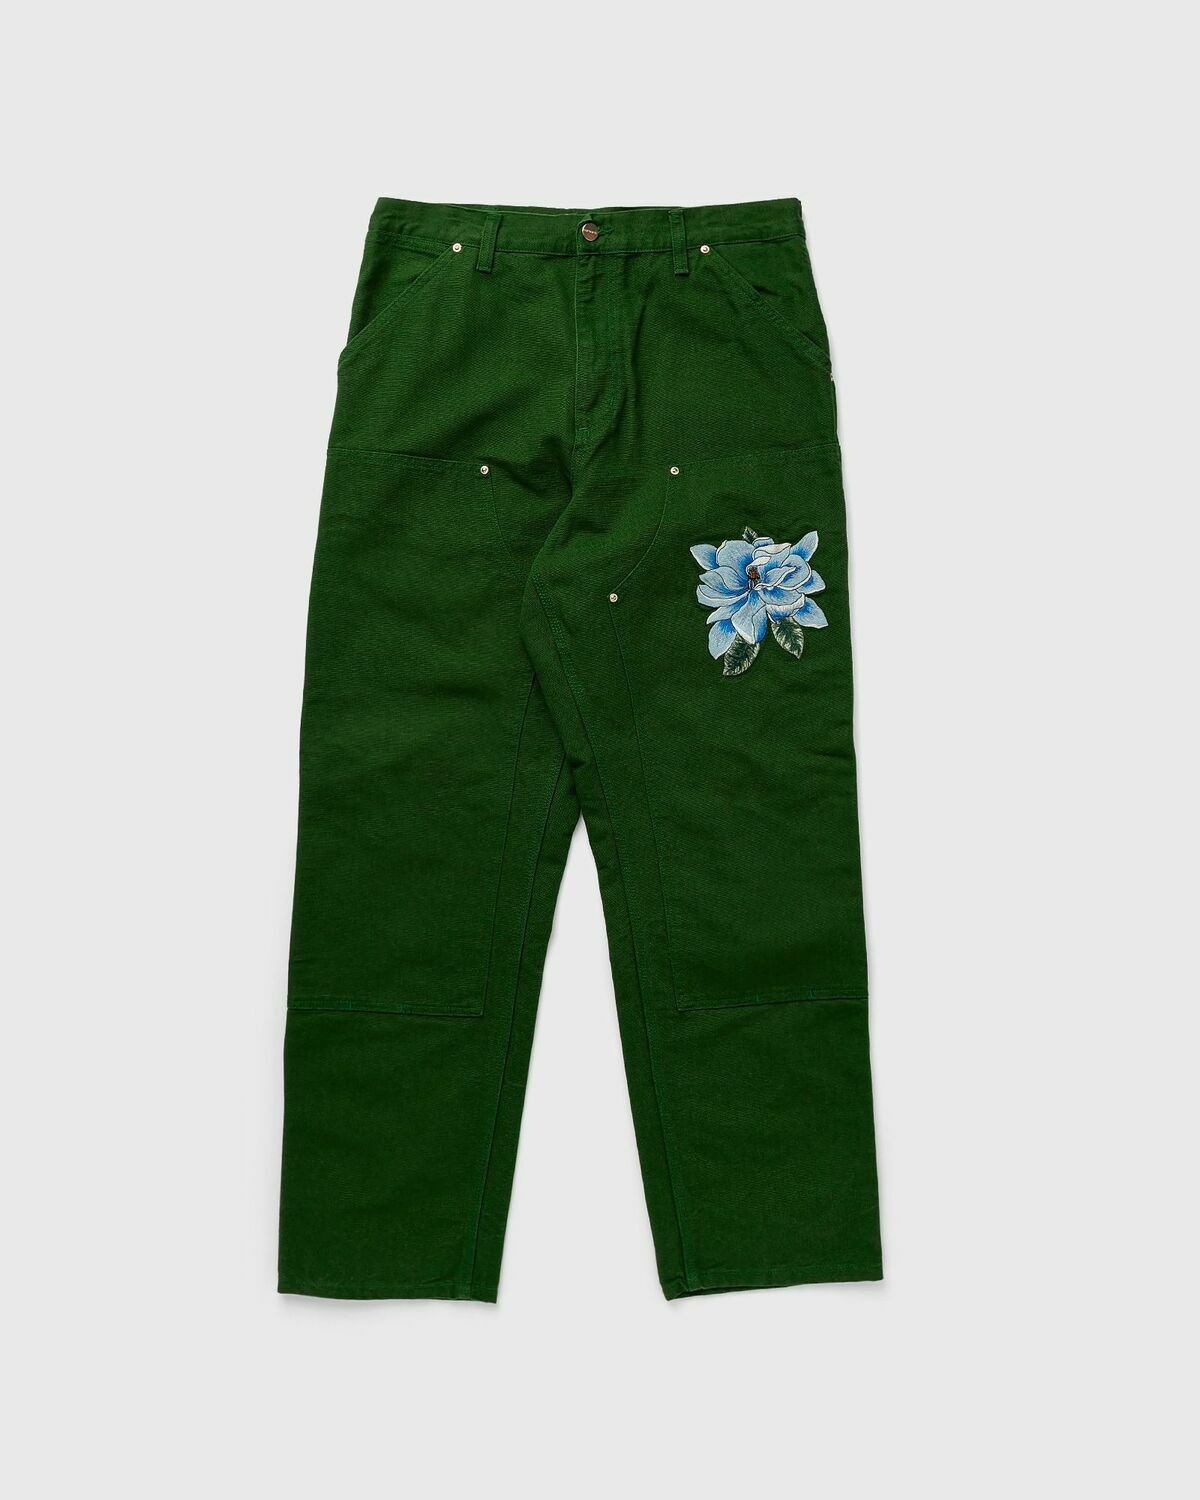 Carhartt Multicolor Pants for Men for sale